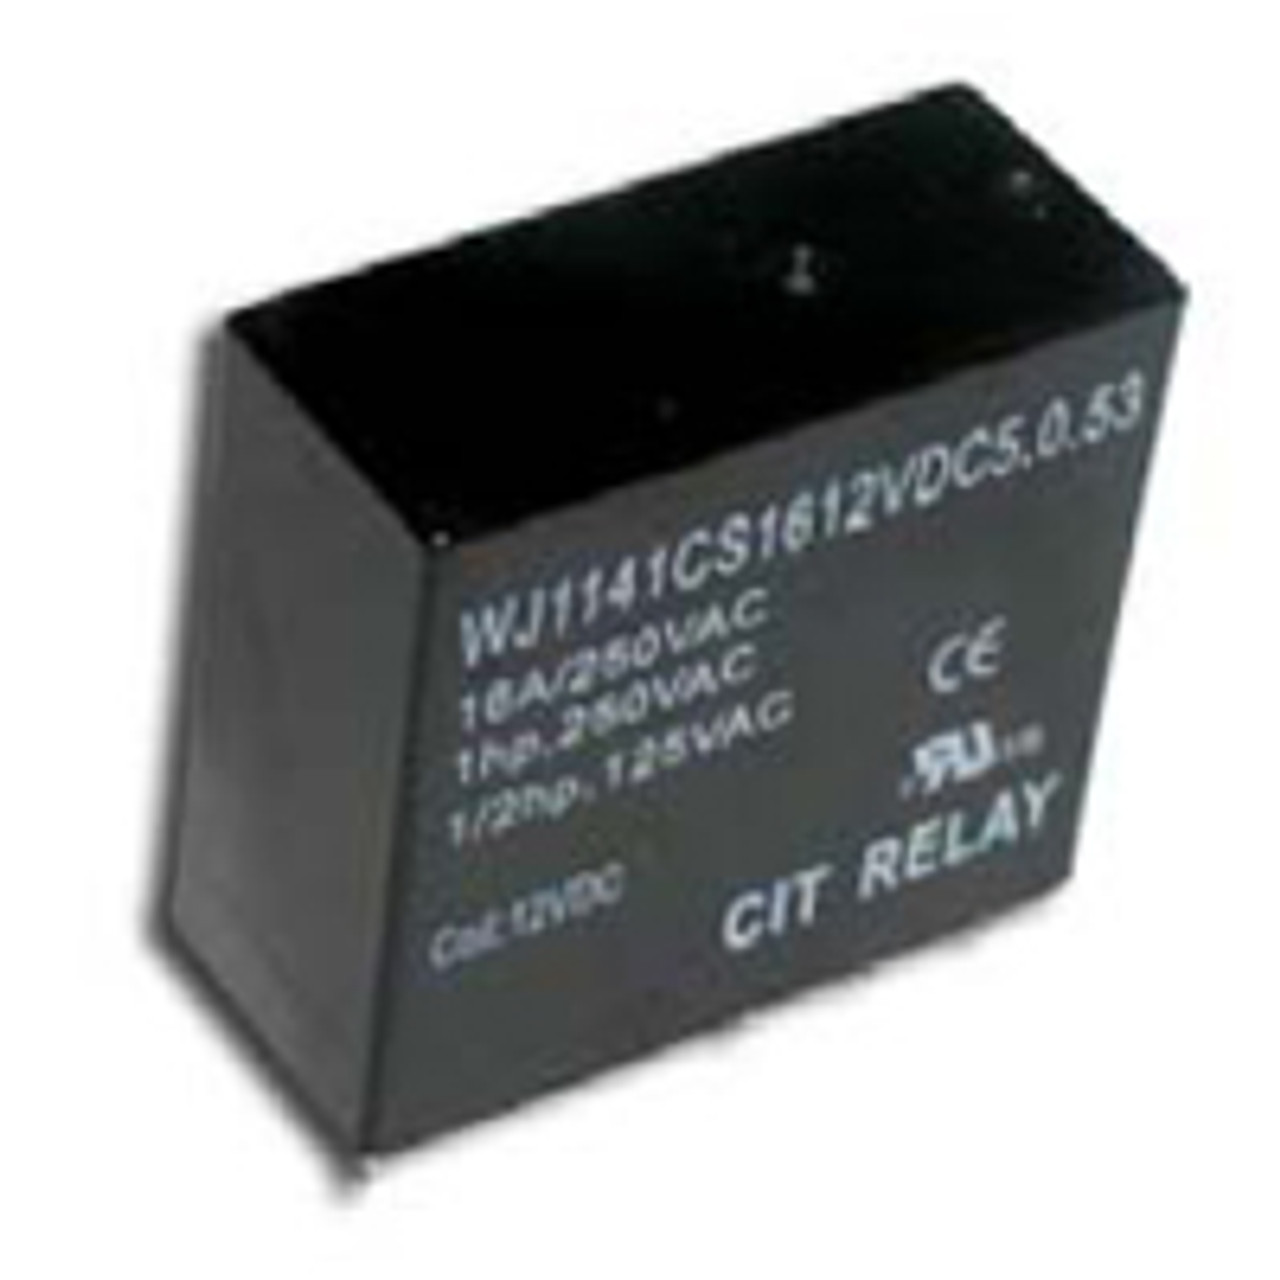 CIT Relay and Switch J1142CS56VDC5.0.80 General Purpose Relays